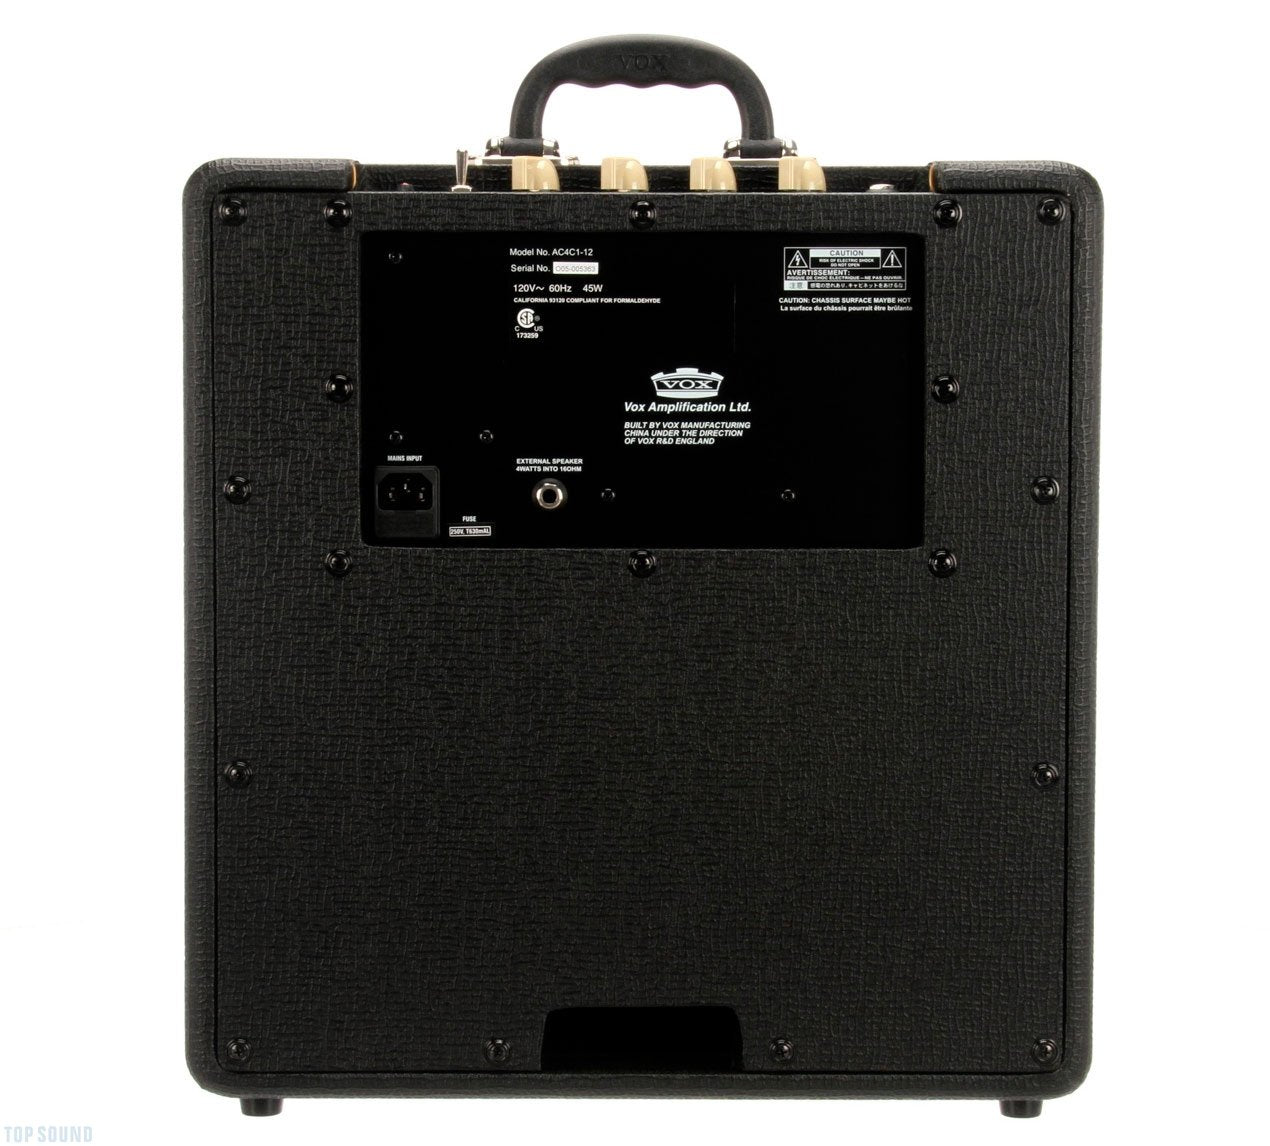 Vox AC4C1-12 4 watt tube combo Amplifier with 12 inch speaker